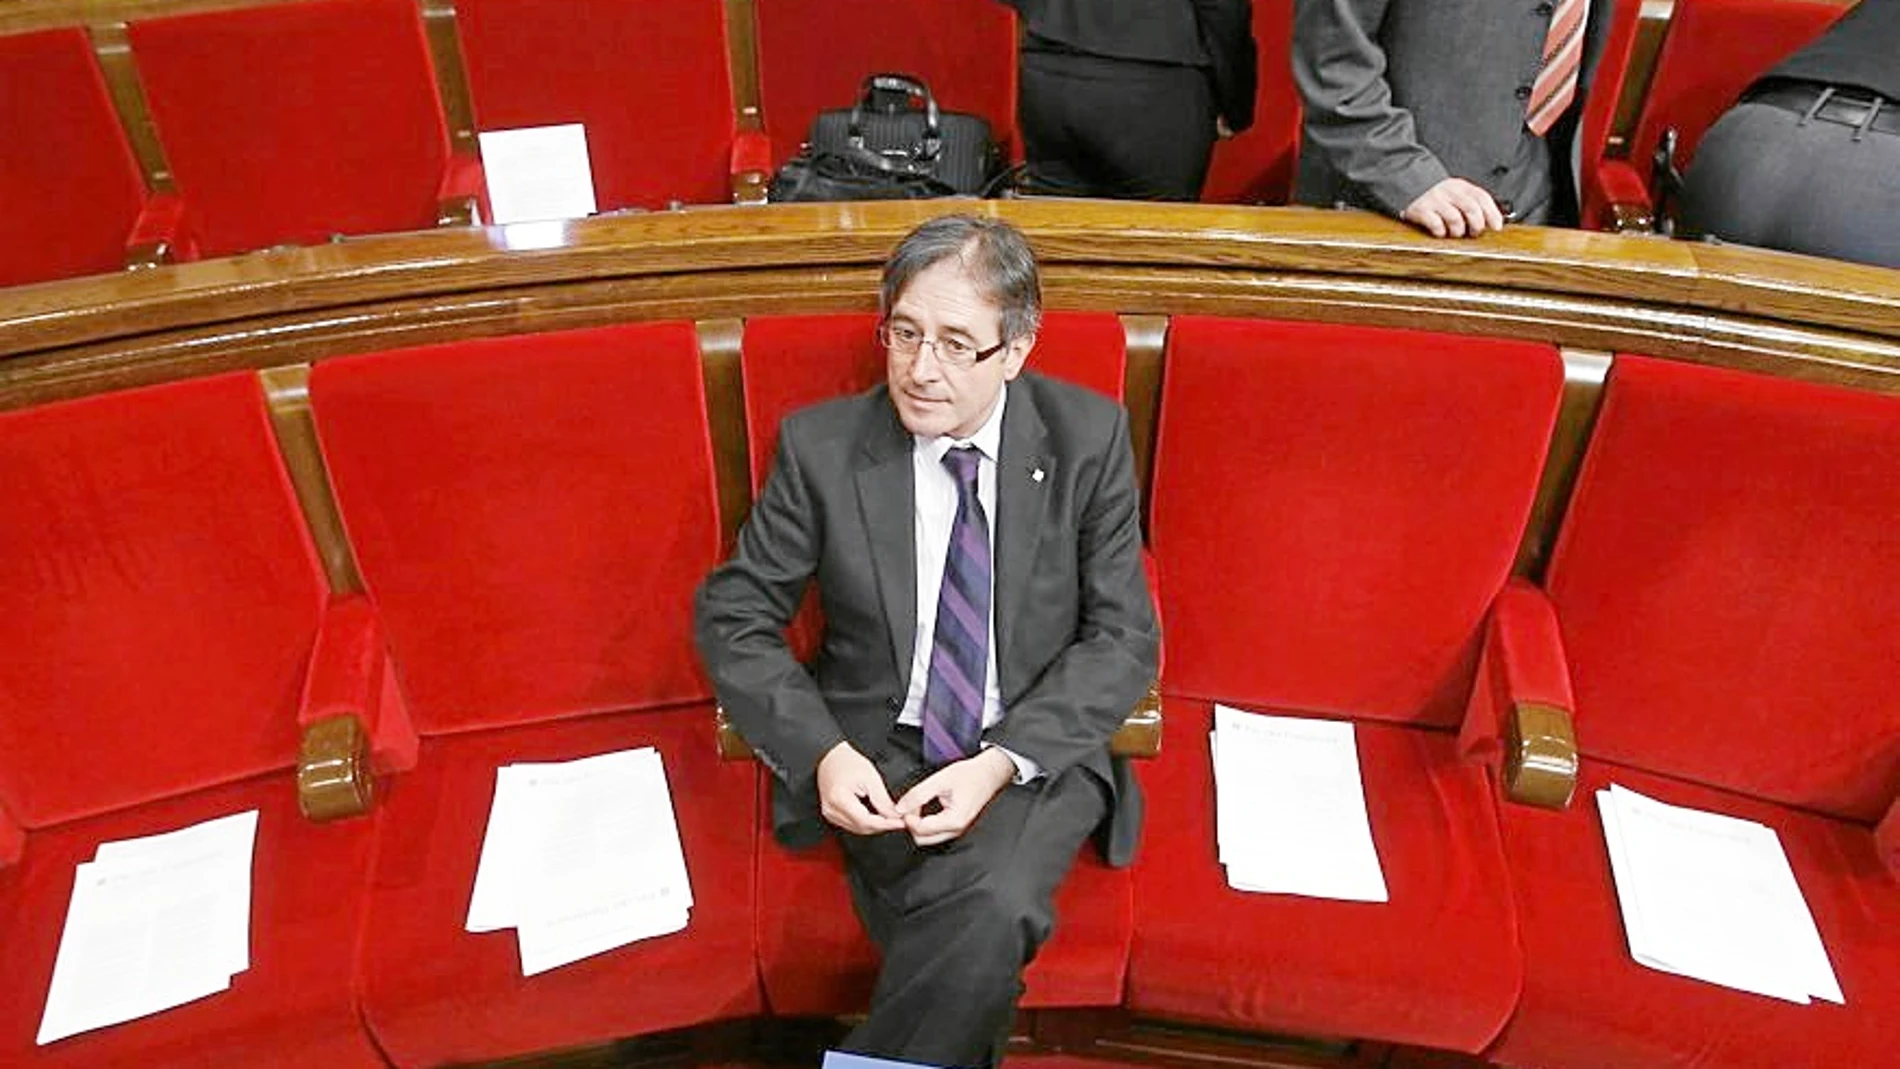 El ex conseller Jordi Ausàs (ERC) en una imagen de archivo en el Parlament de Cataluña